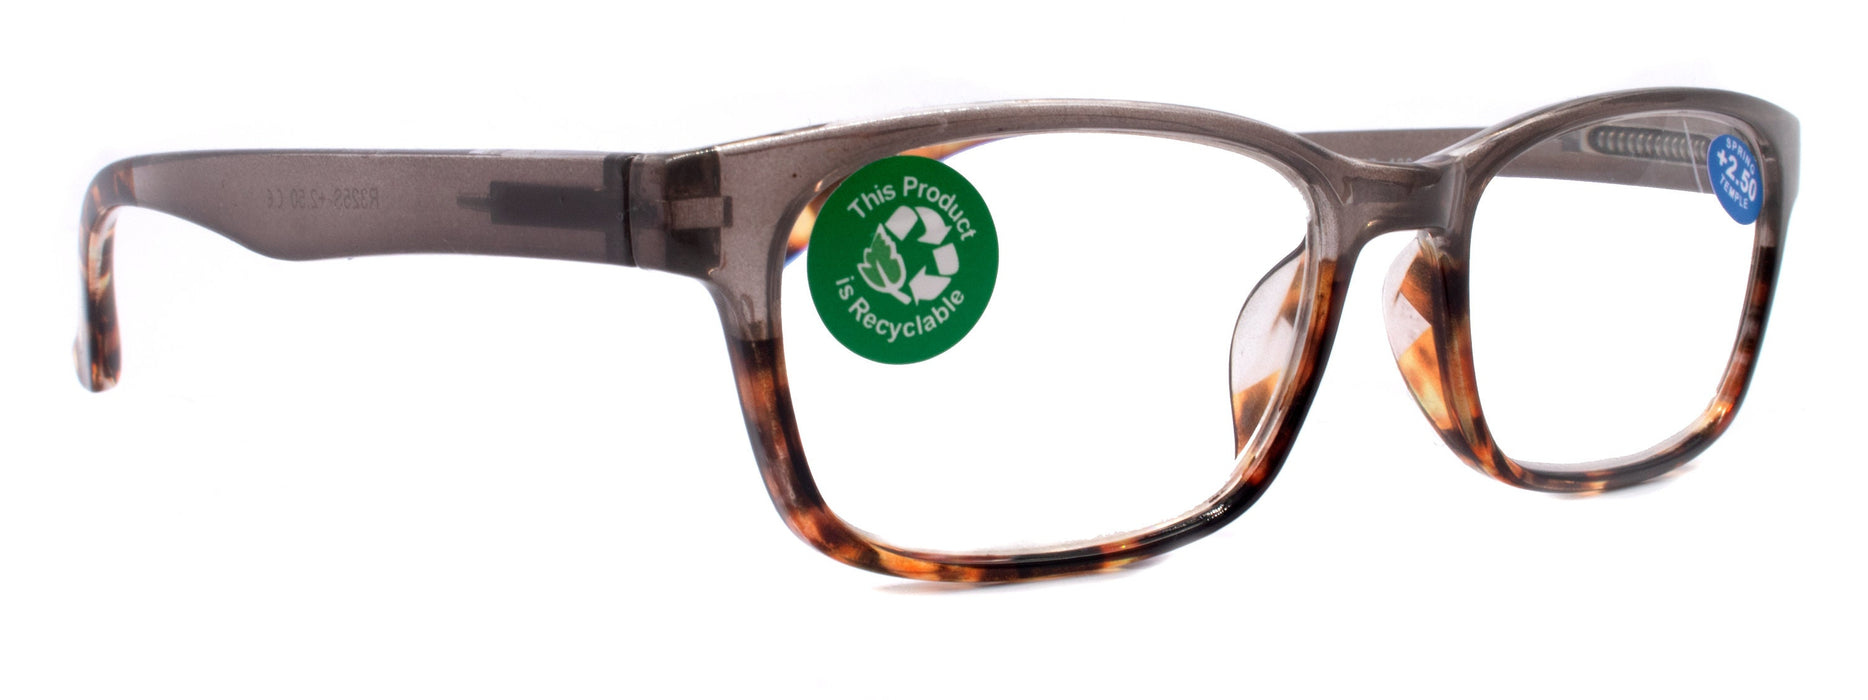 Desiree, (Premium) Reading Glasses, High End Reader +1.25..+3 Magnifying Wayfarer Style (Gray Tortoise Brown) Optical Frame. NY Fifth Avenue